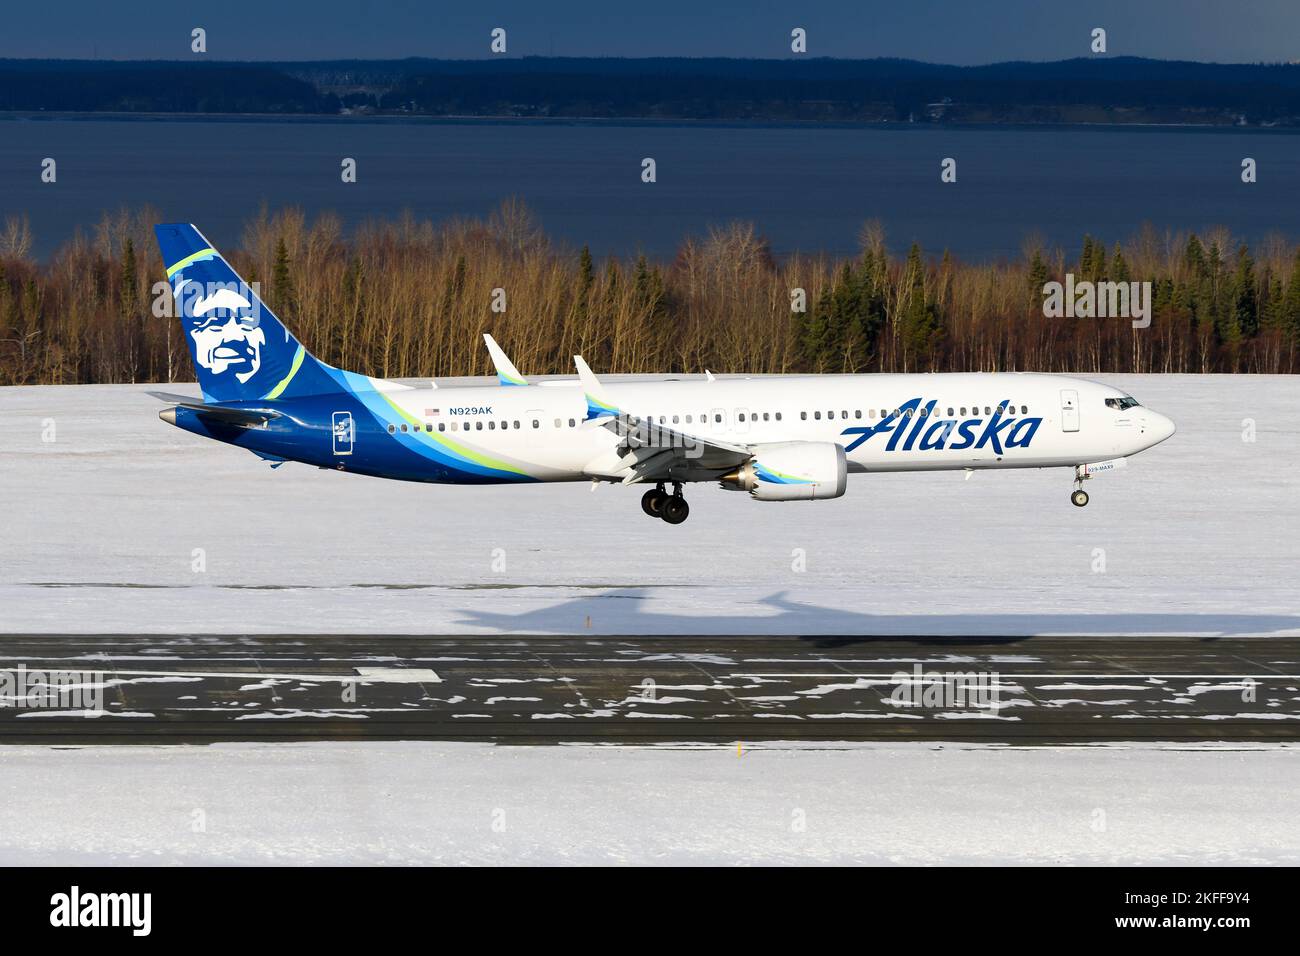 Alaska Airlines Boeing 737-9 Max aircraft landing at Anchorage Airport, Alaska, USA. Boeing 737 Max of Alaska Airlines. Airplane N929AK. Stock Photo